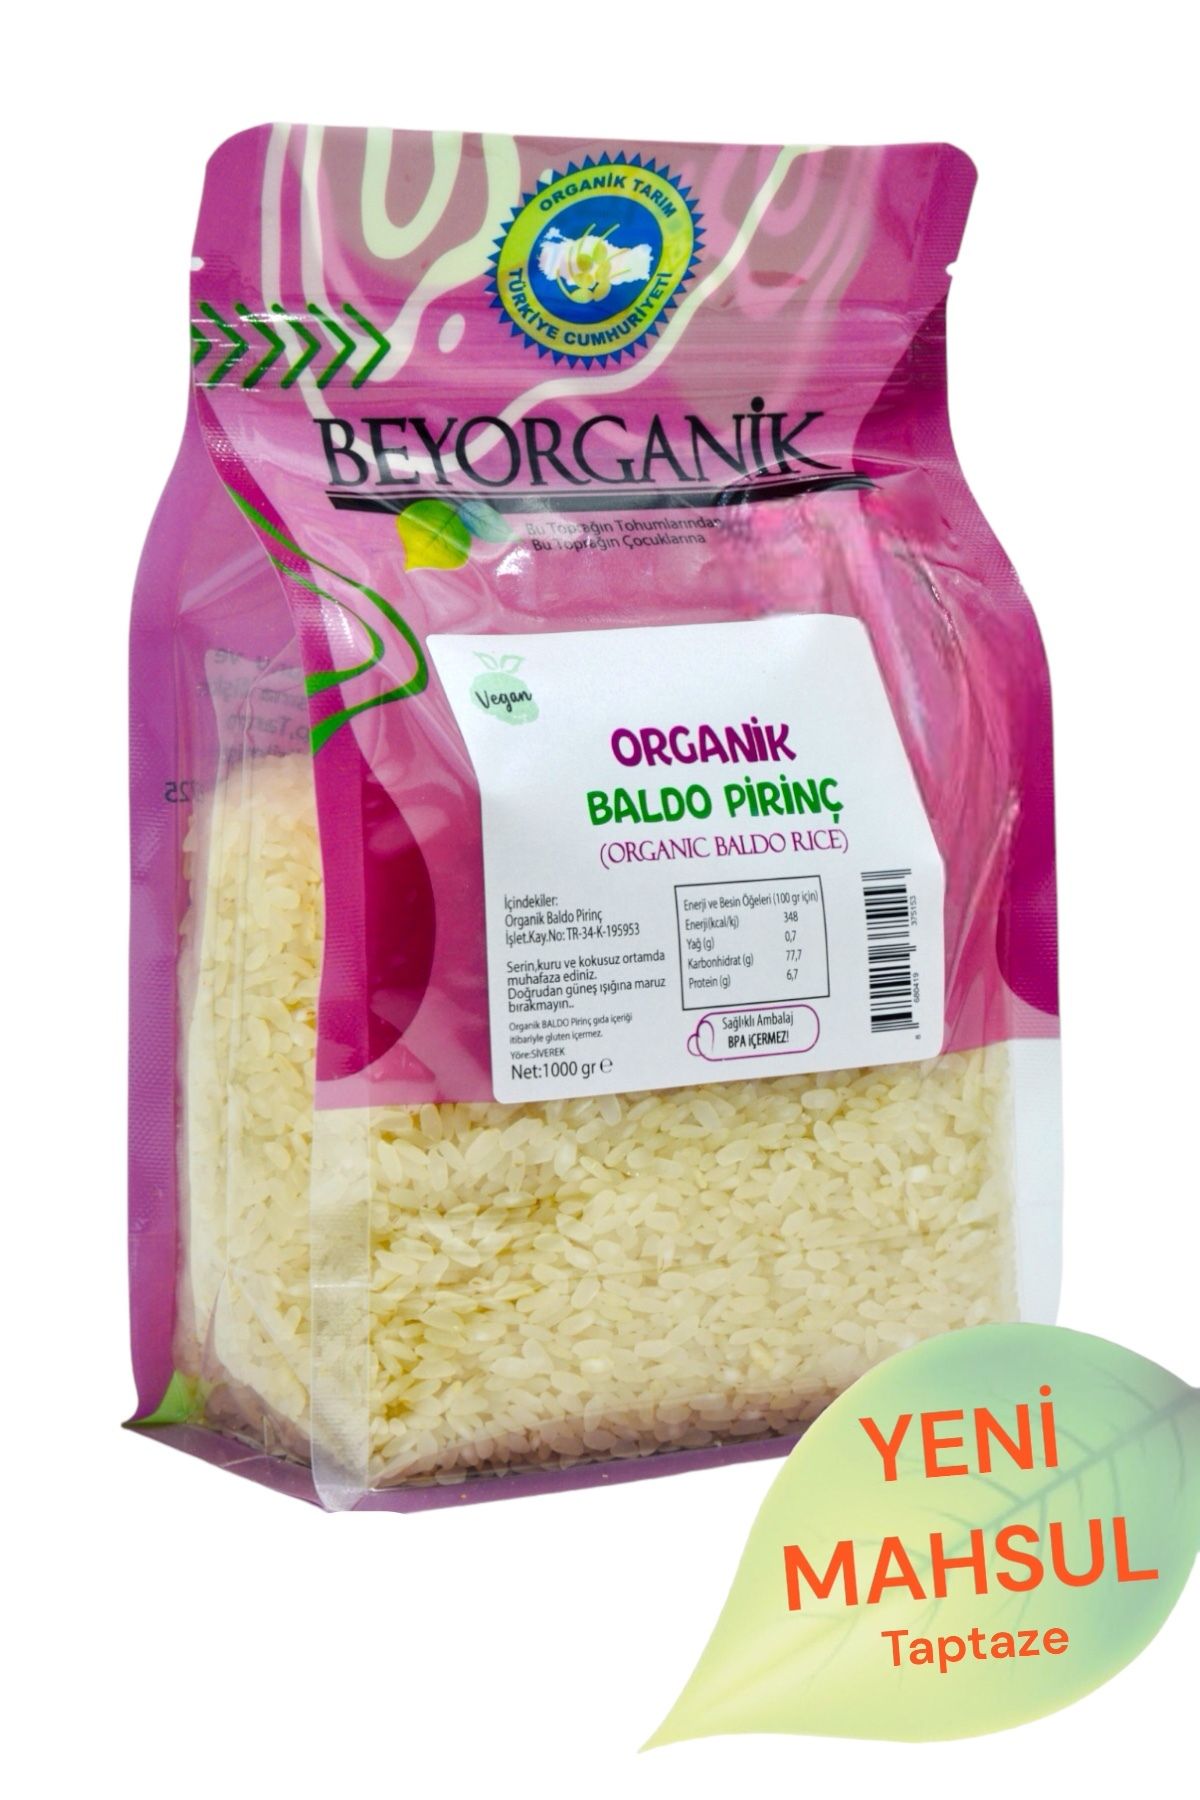 BEYORGANİK Organik Pirinç Baldo 1kg